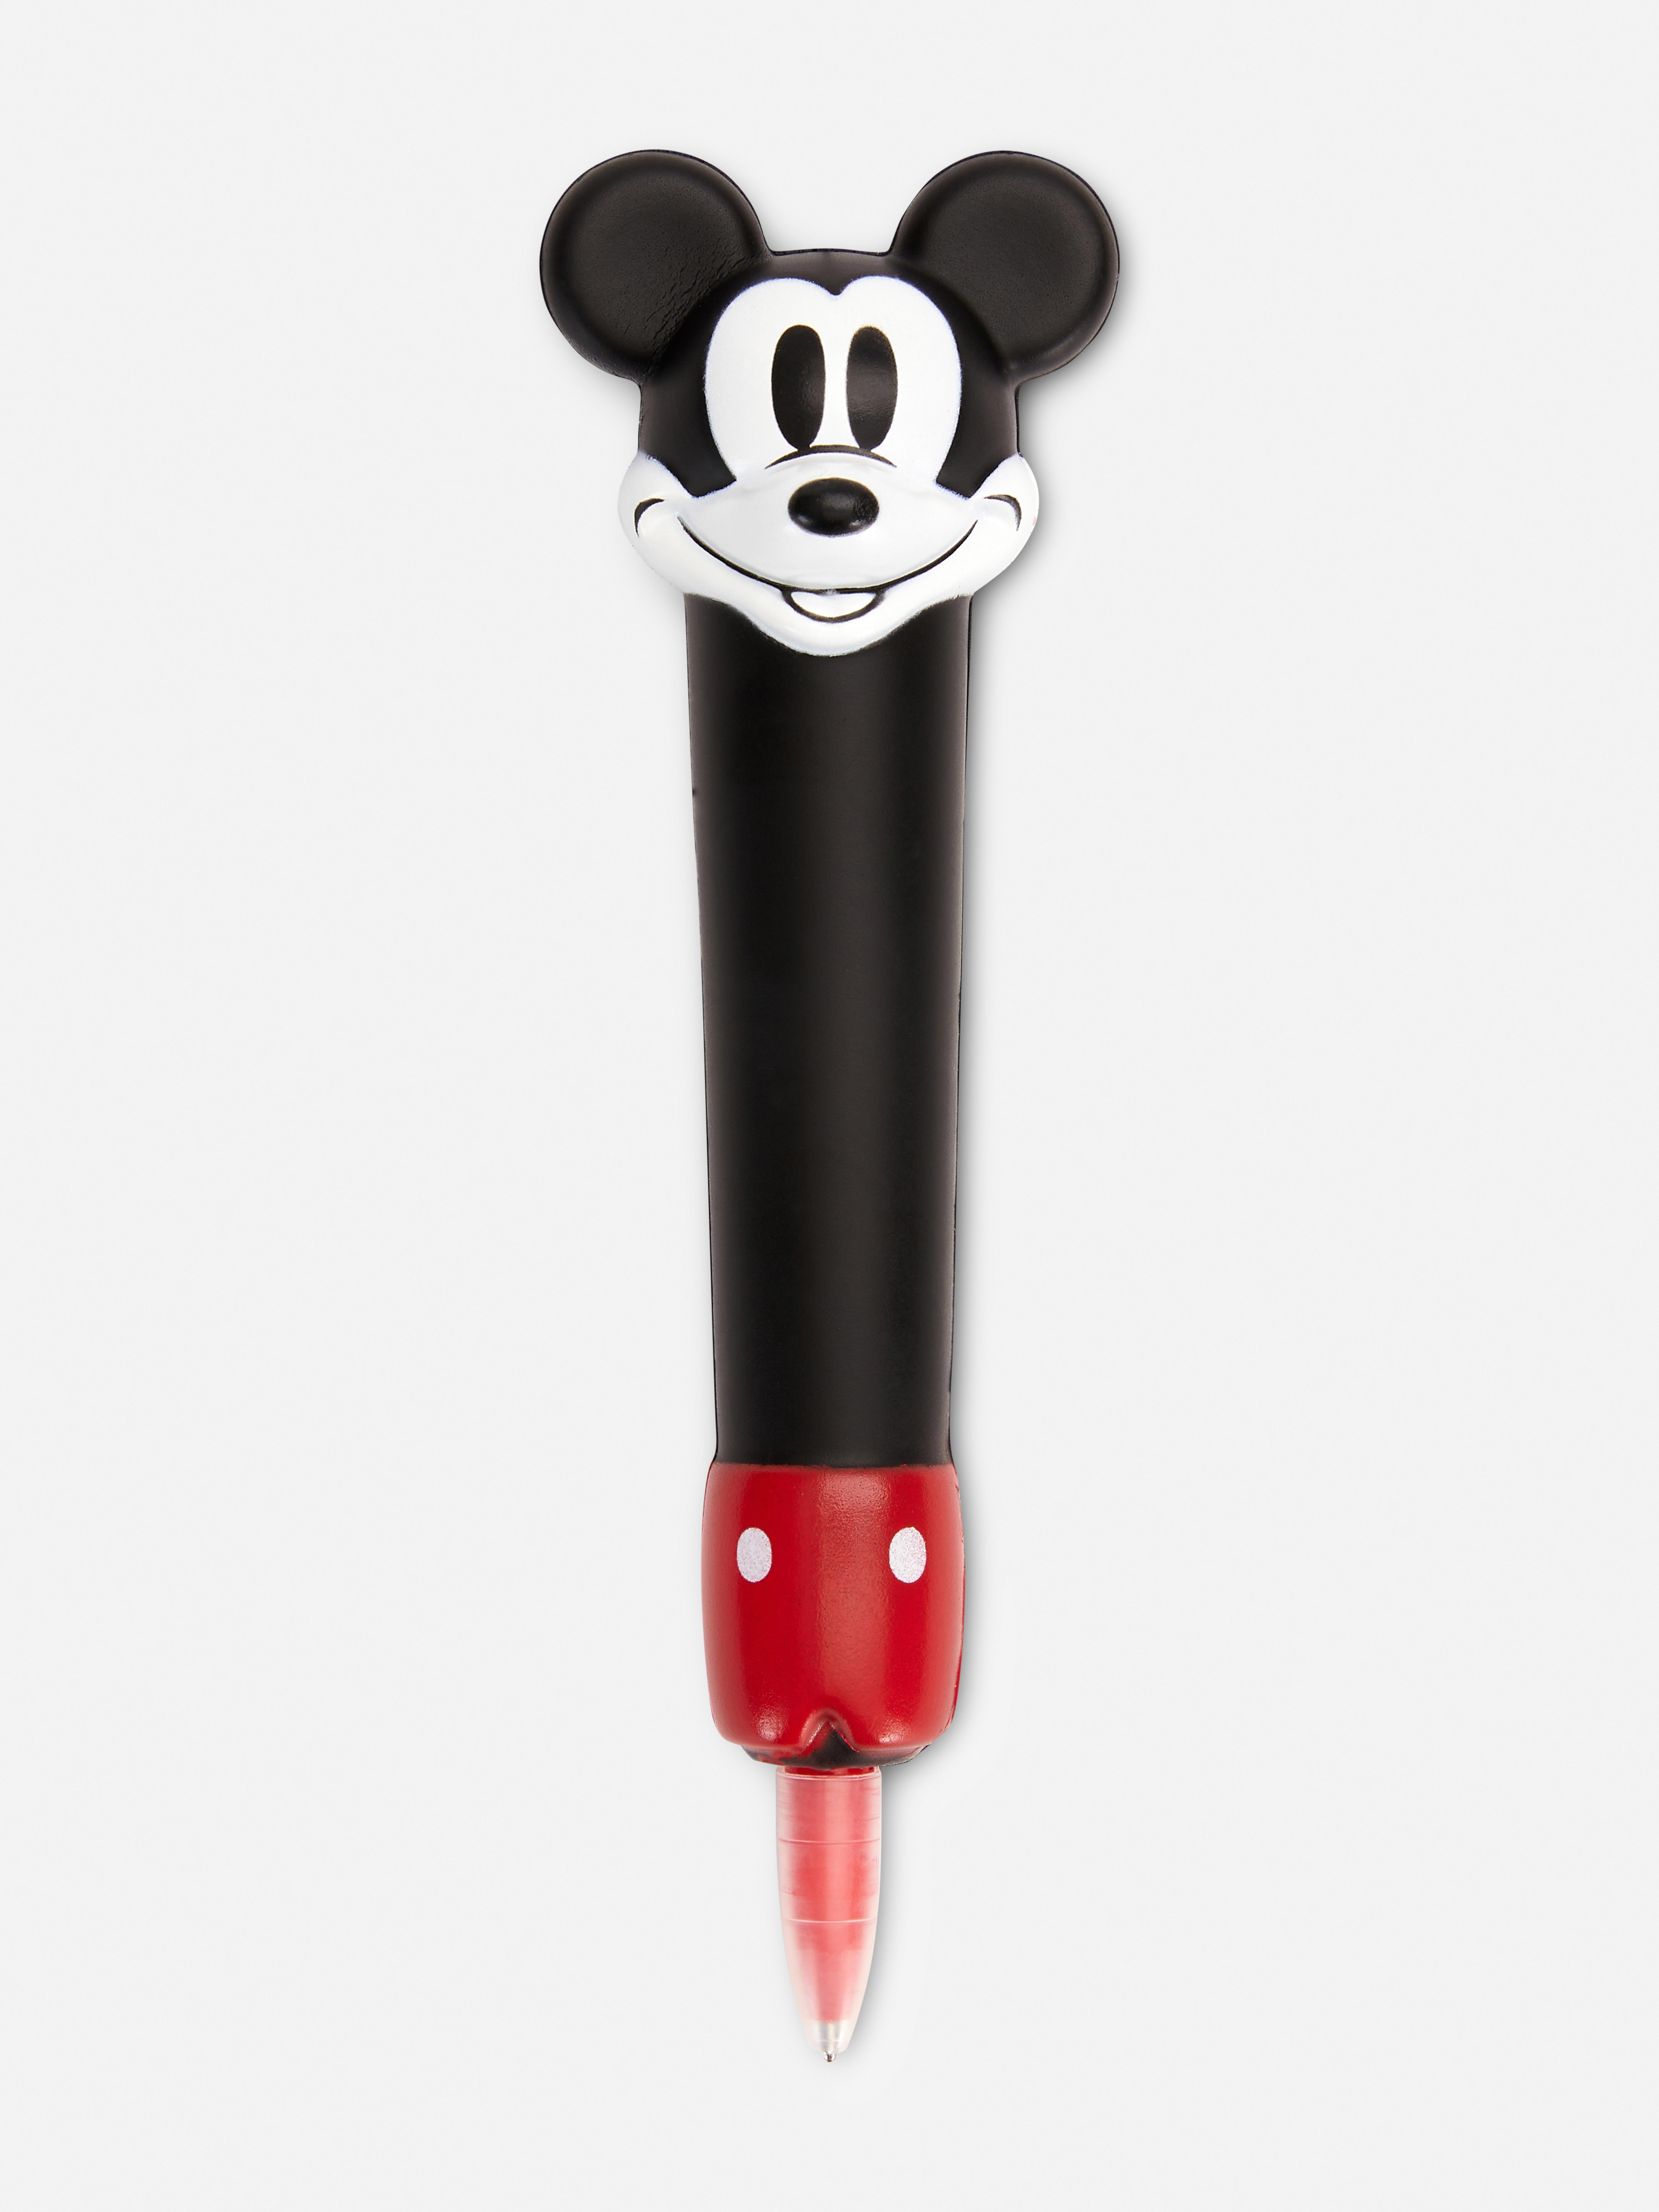 Pix Mickey Mouse de la Disney